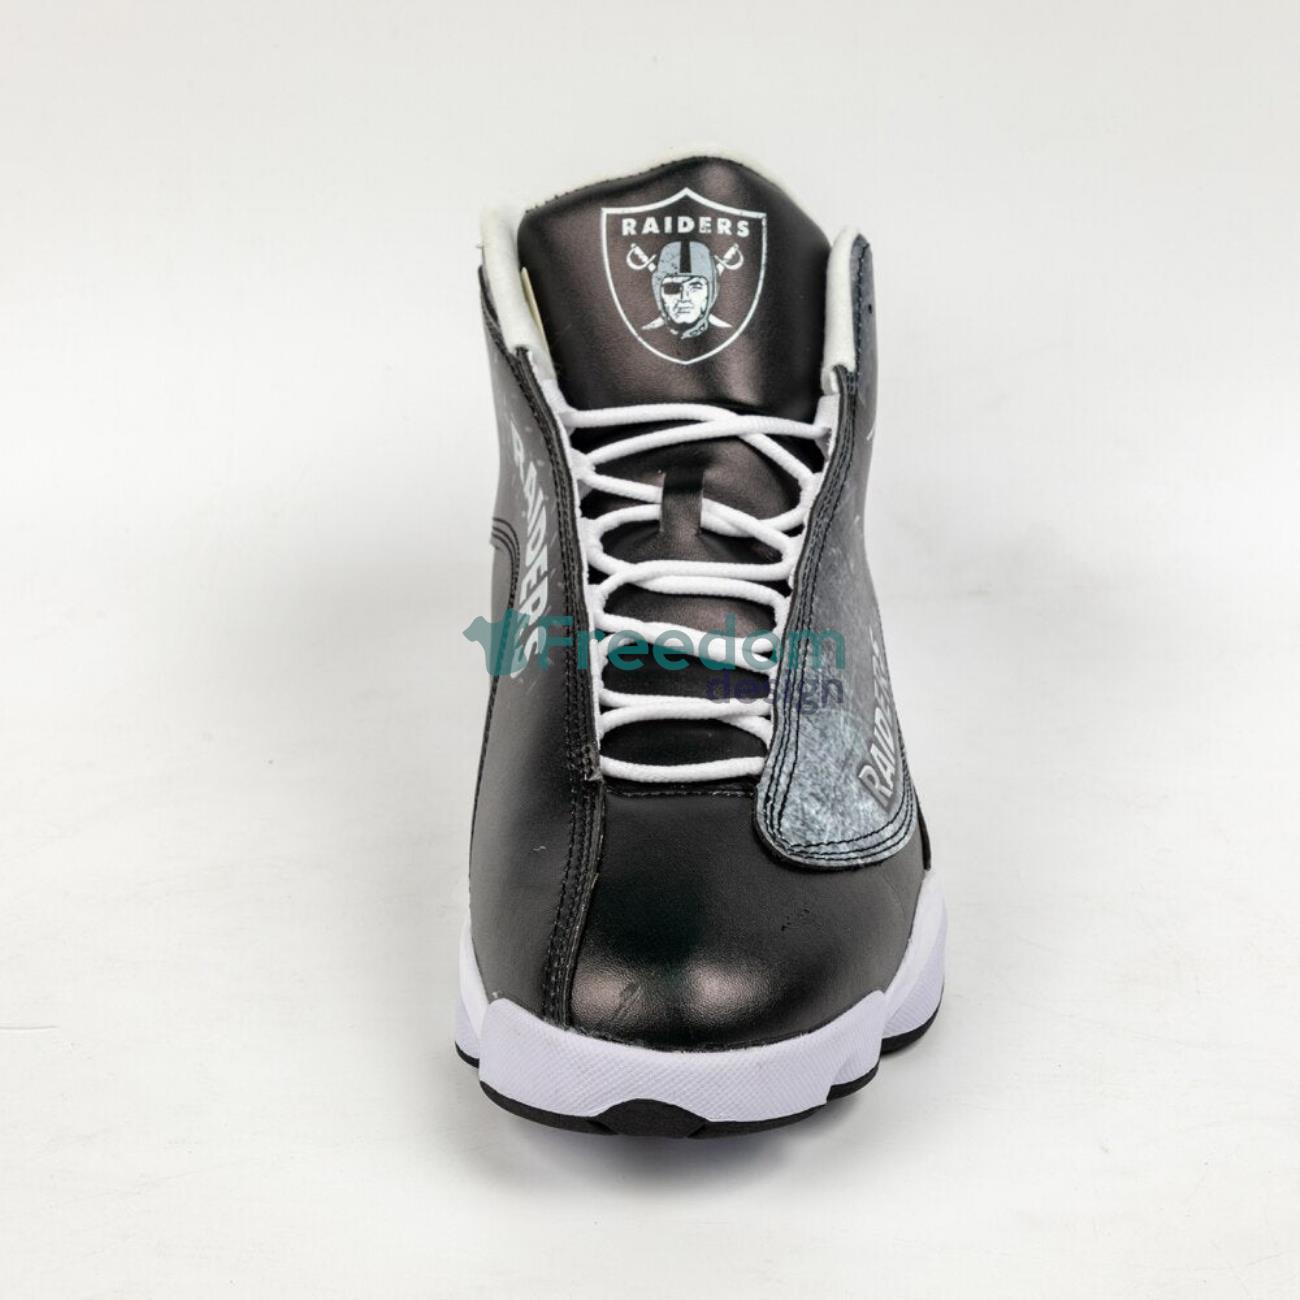 Las Vegas Raiders Team Air Jordan 13 Sneaker Shoes For Fans qAw